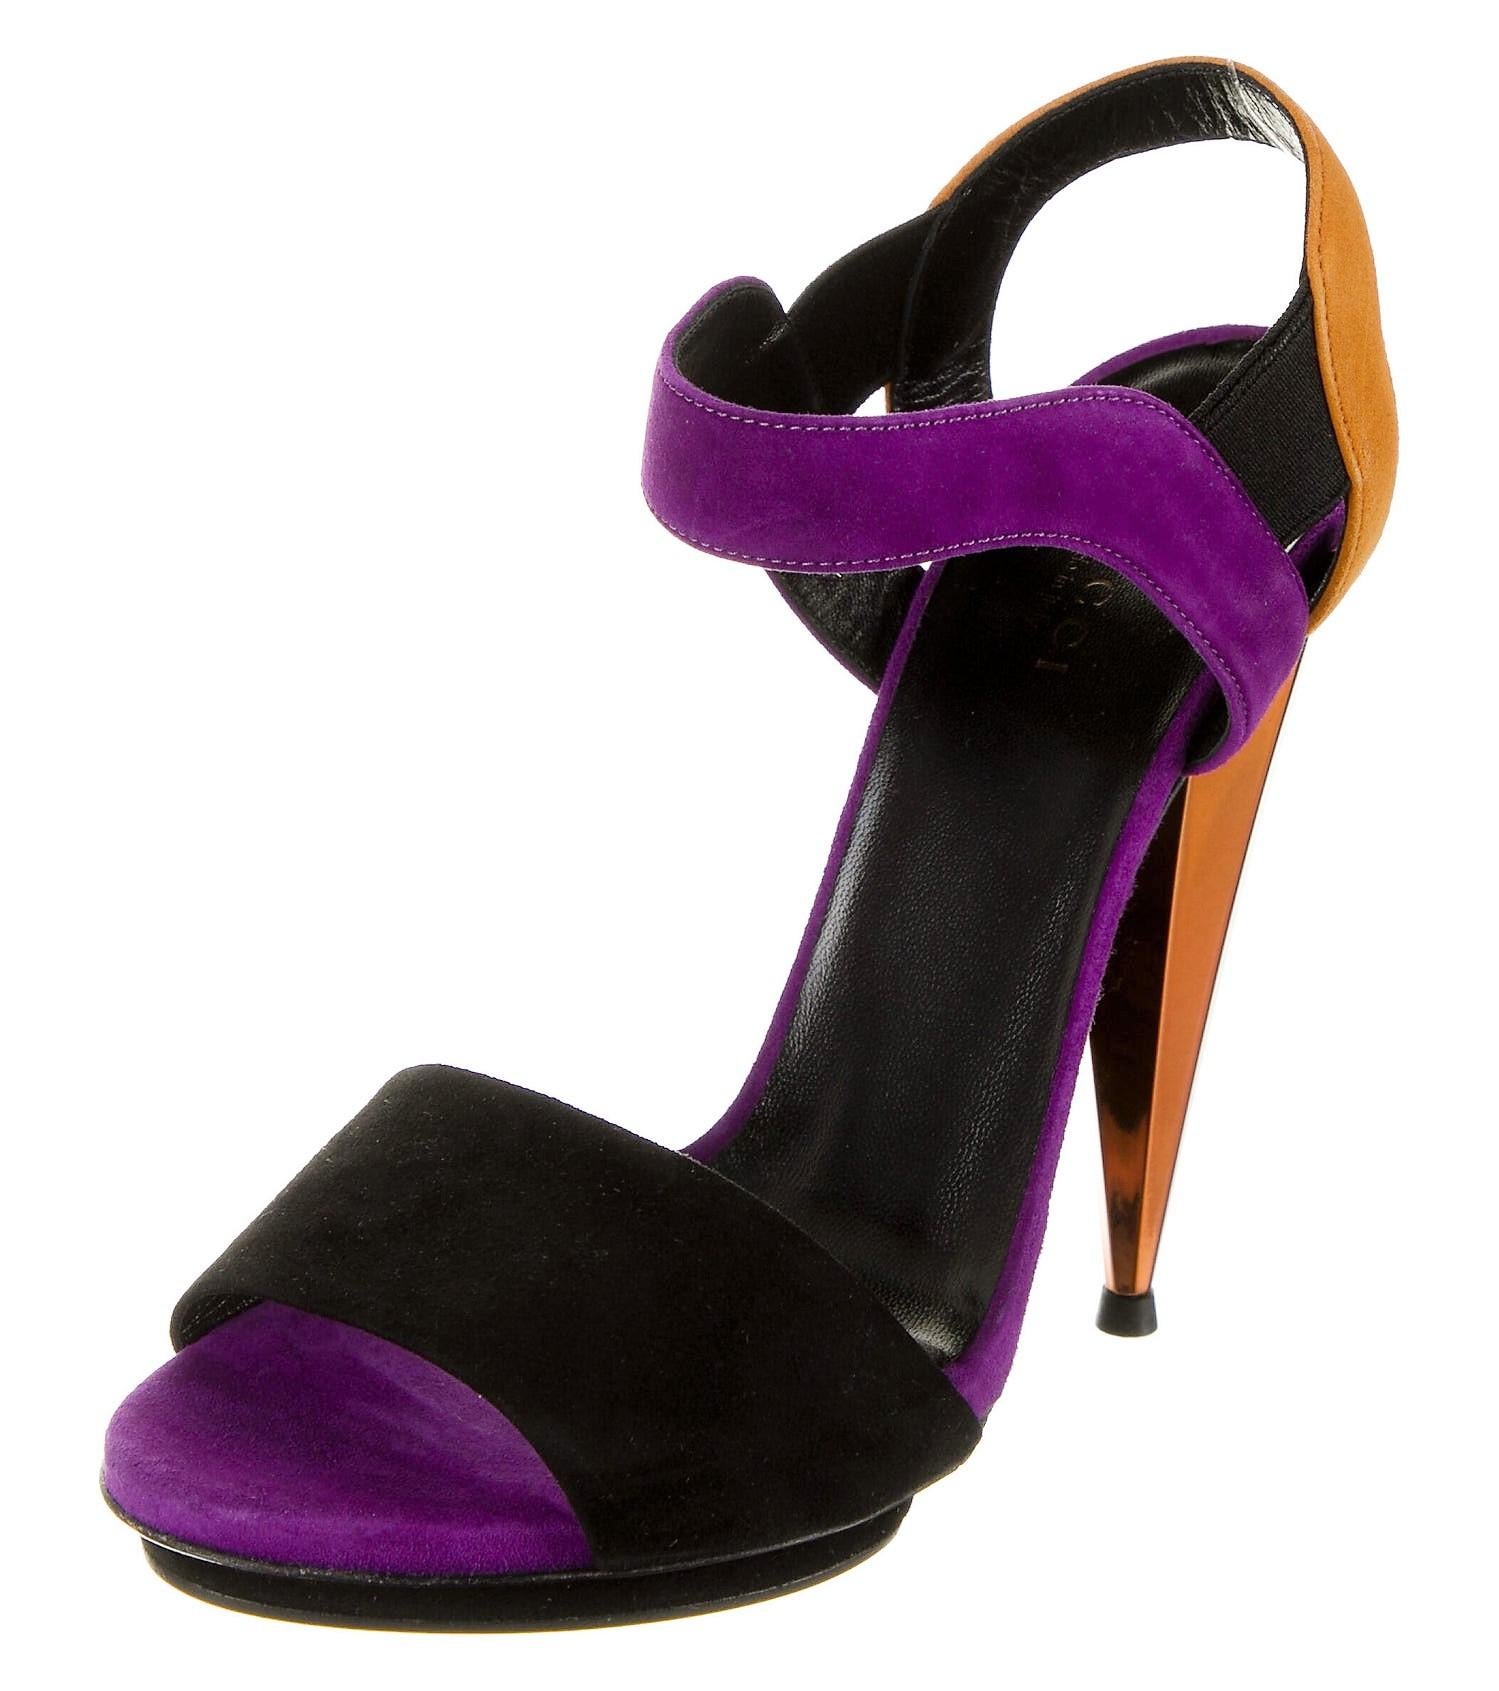 New Gucci Ad Runway 2014 Purple Orange Suede Mirrored Pump Heels Sz 37.5 For Sale 1